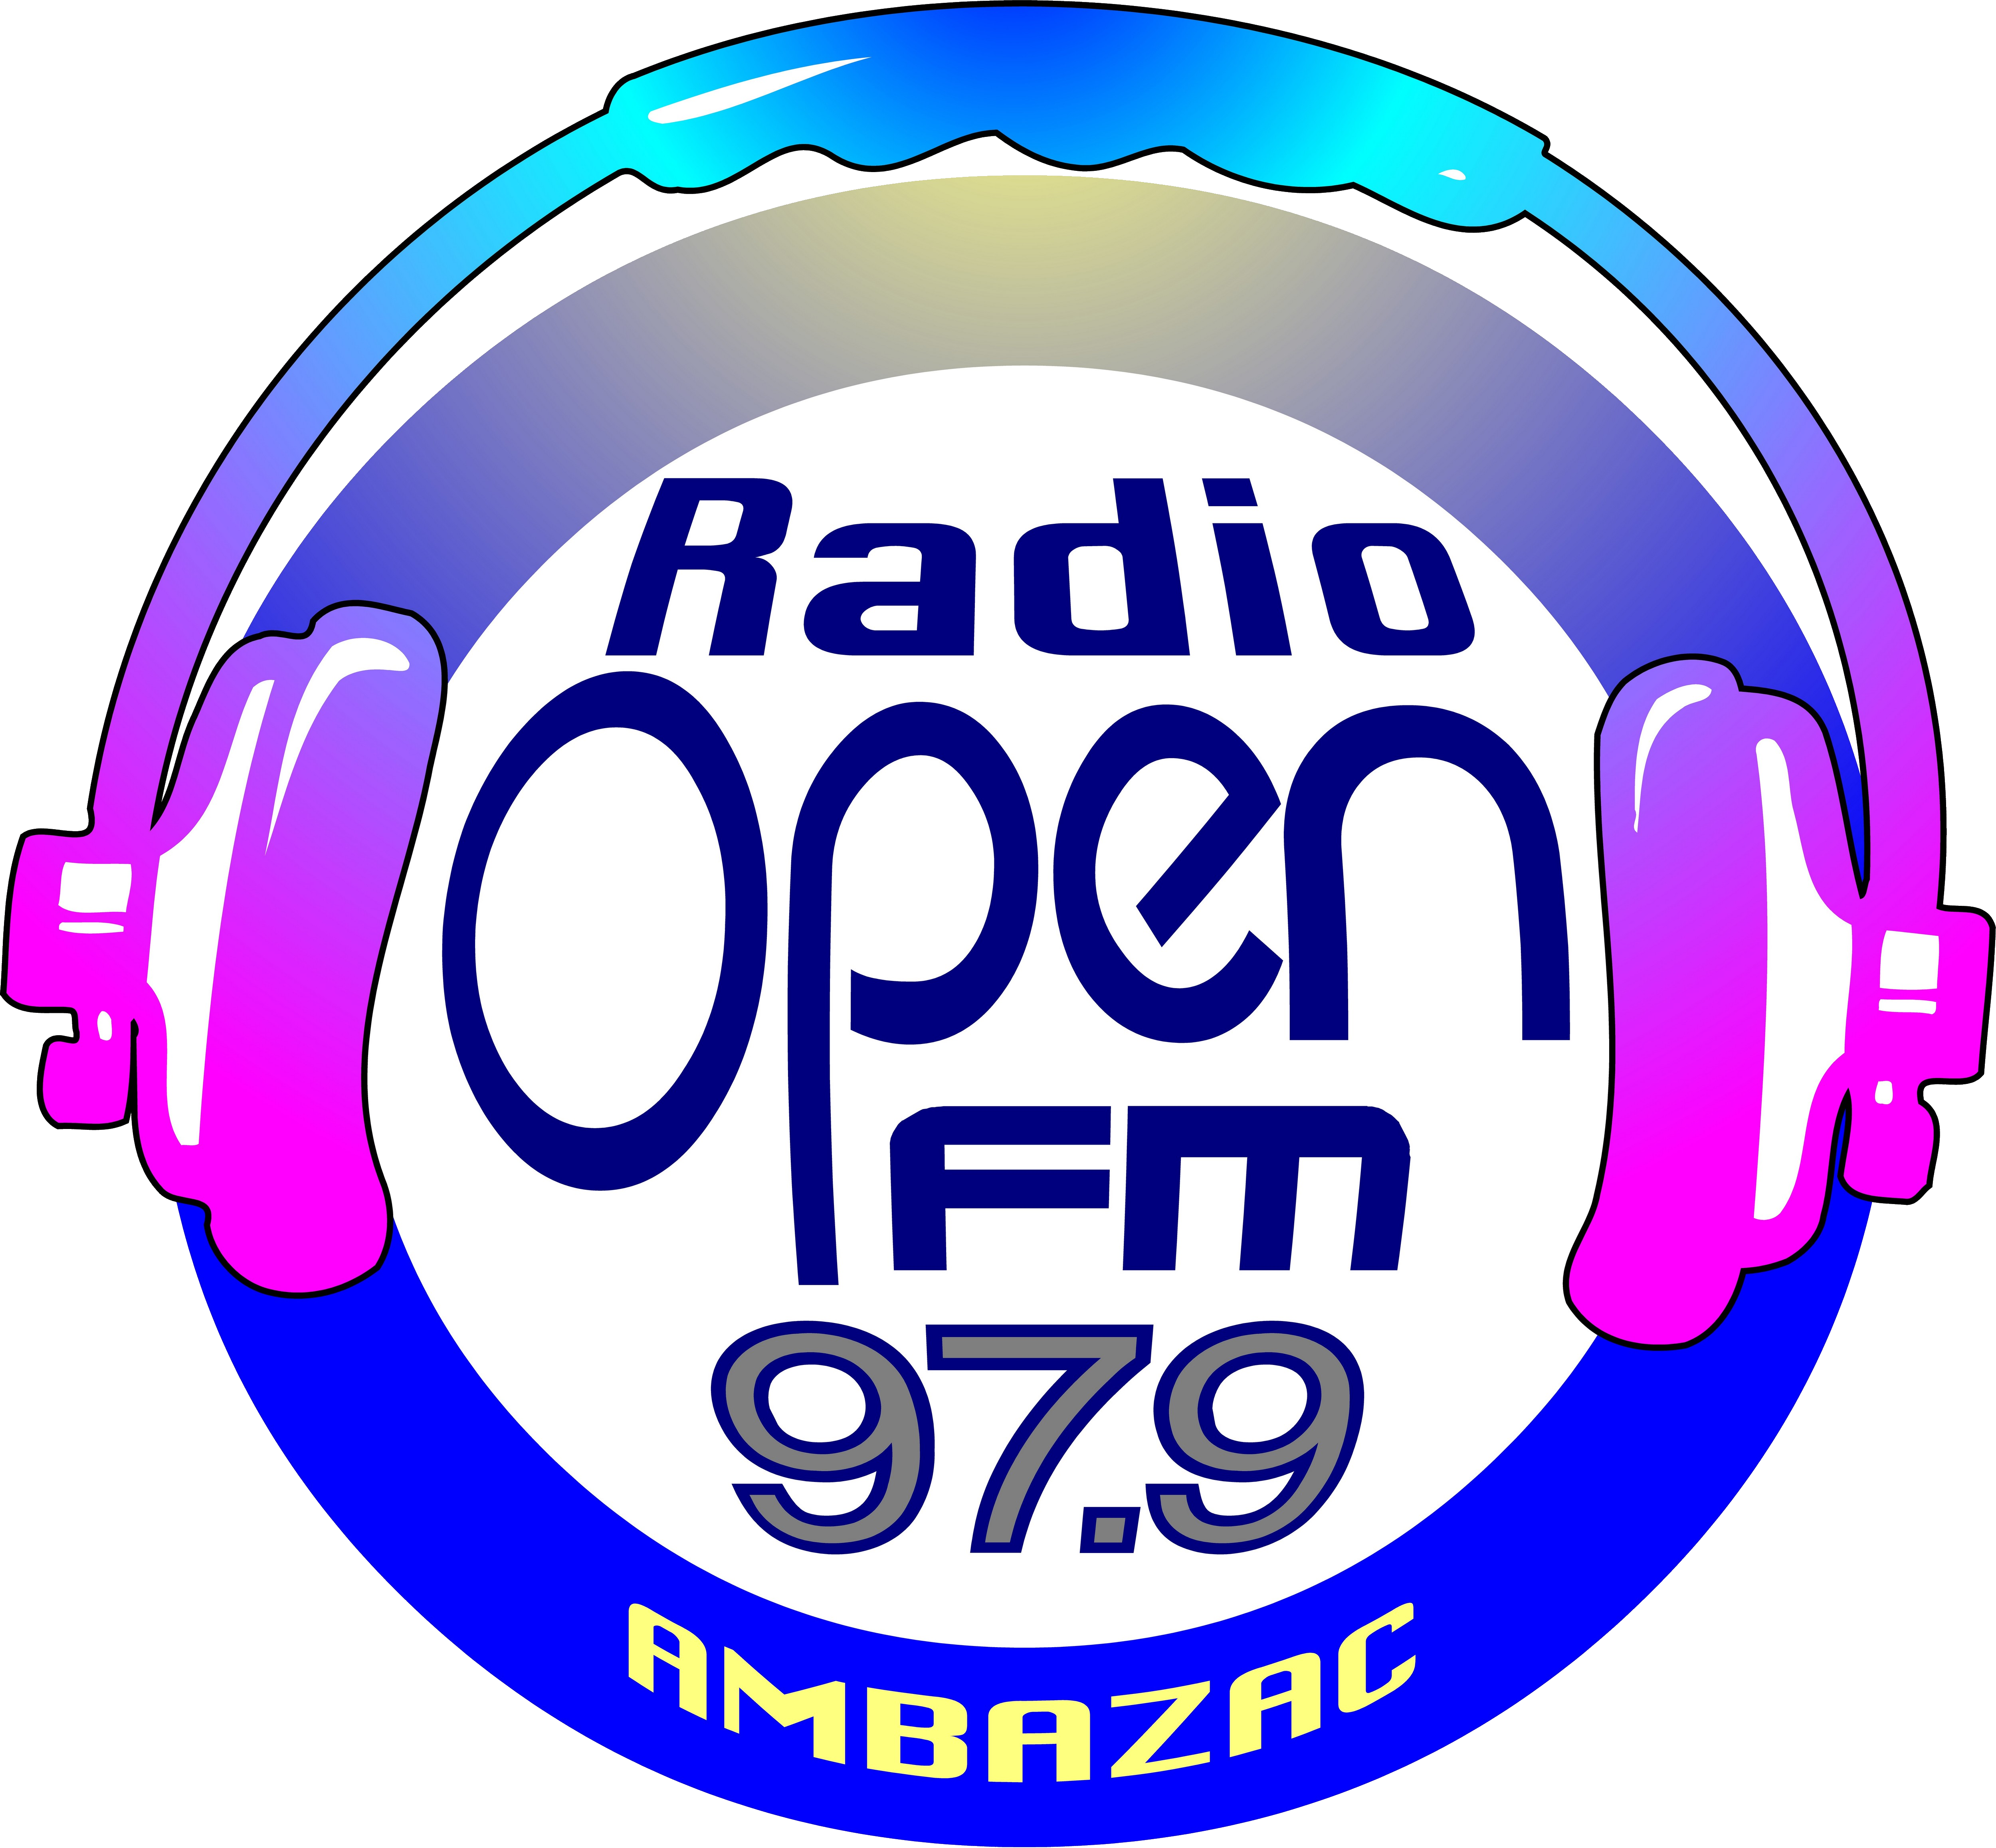 Логотип радиостанции ретро ФМ. Картинки для радио ФМ. Открытое радио. Радио свое ФМ. Hflbj av